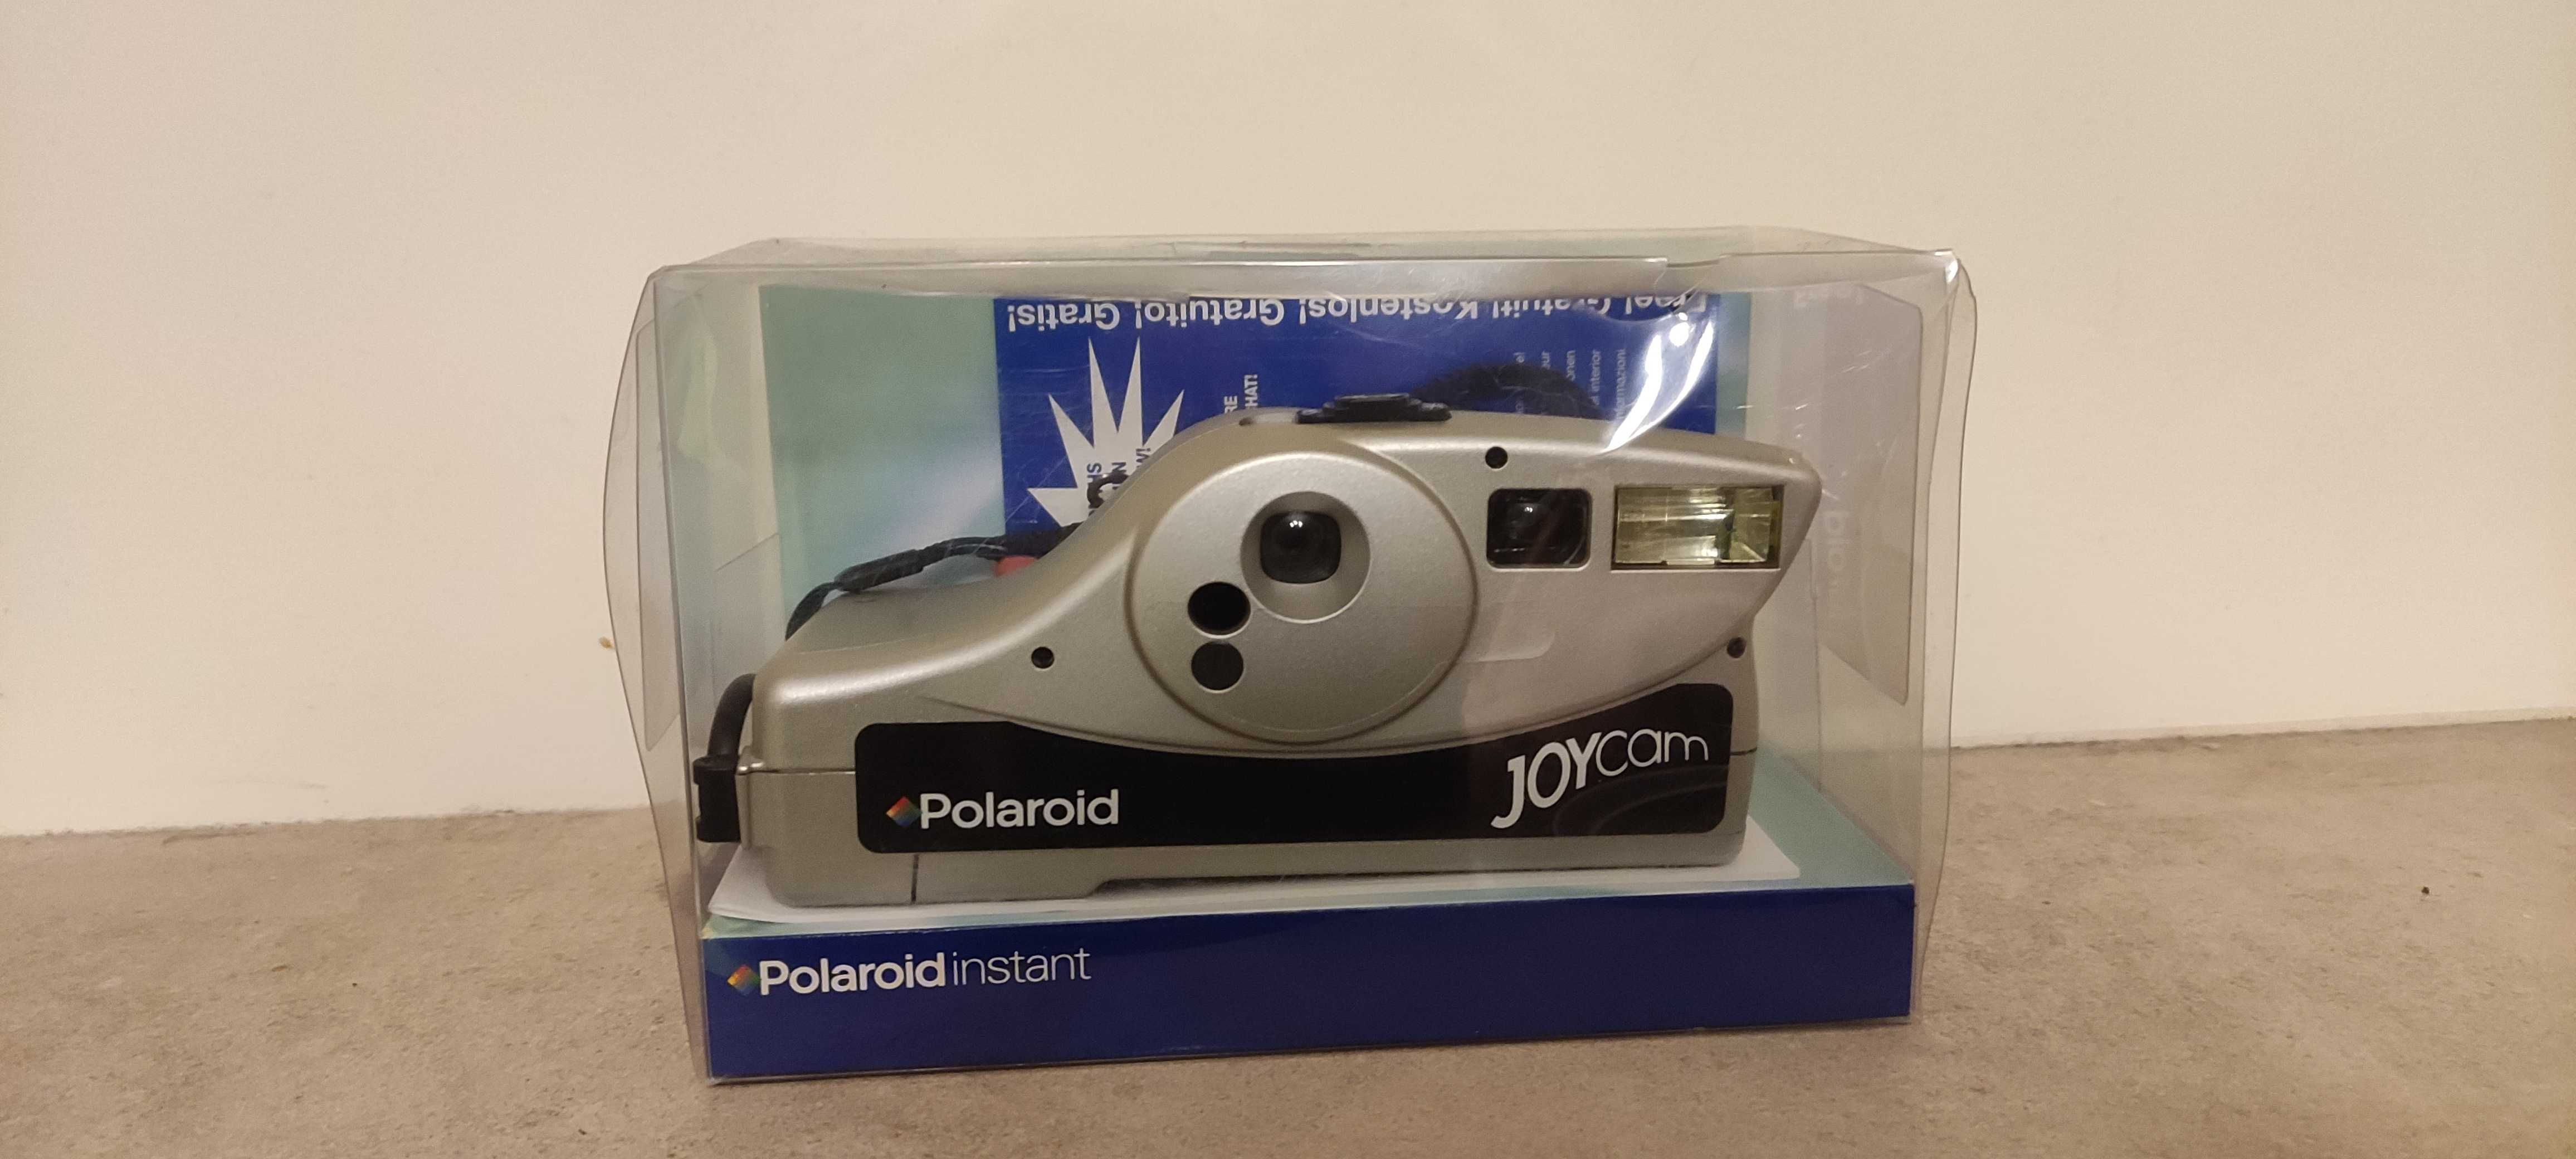 Polaroid Joycam nunca usada